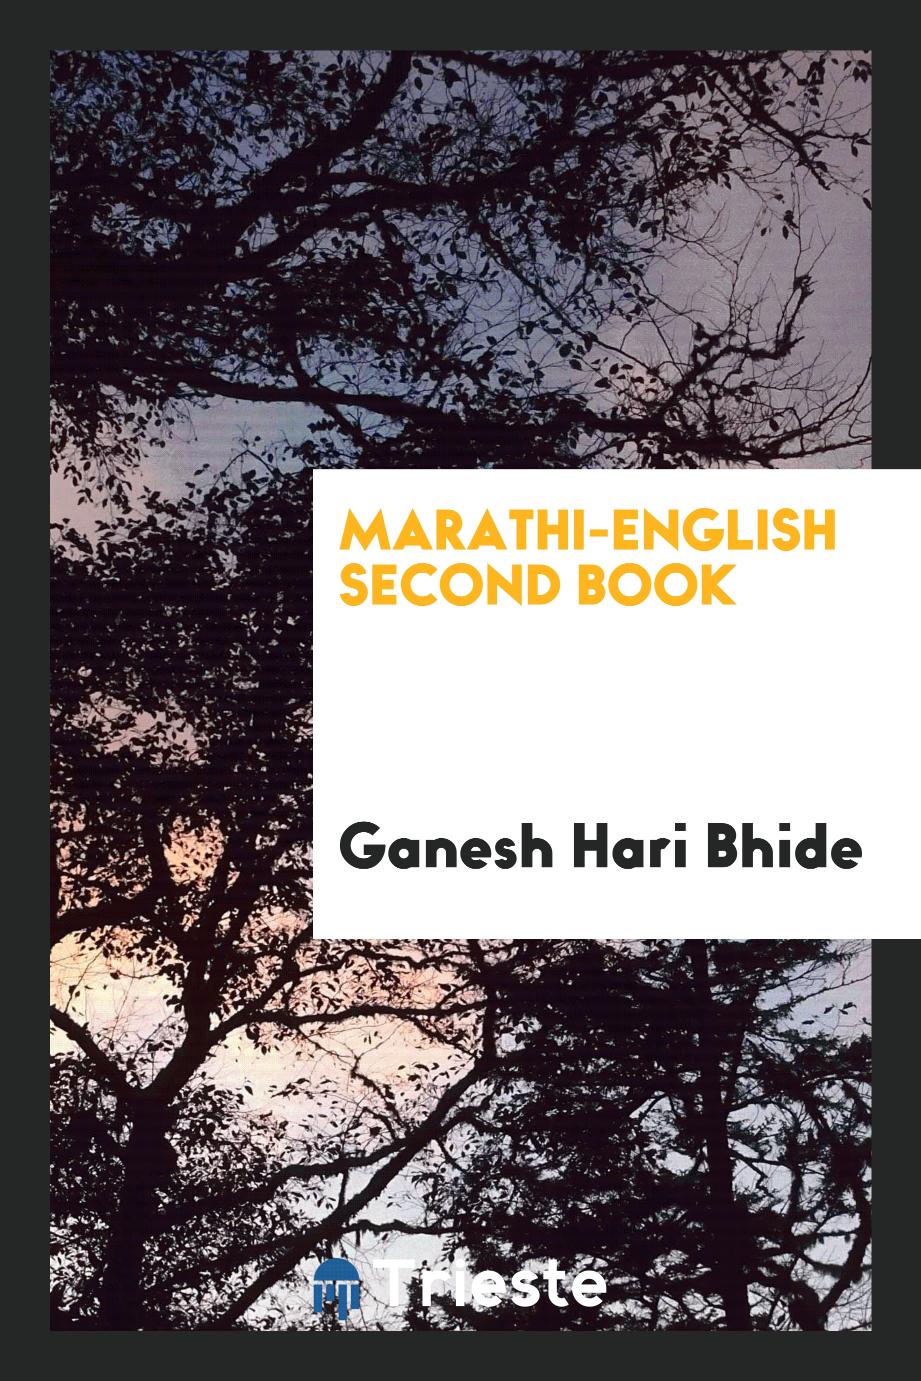 Marathi-English Second Book